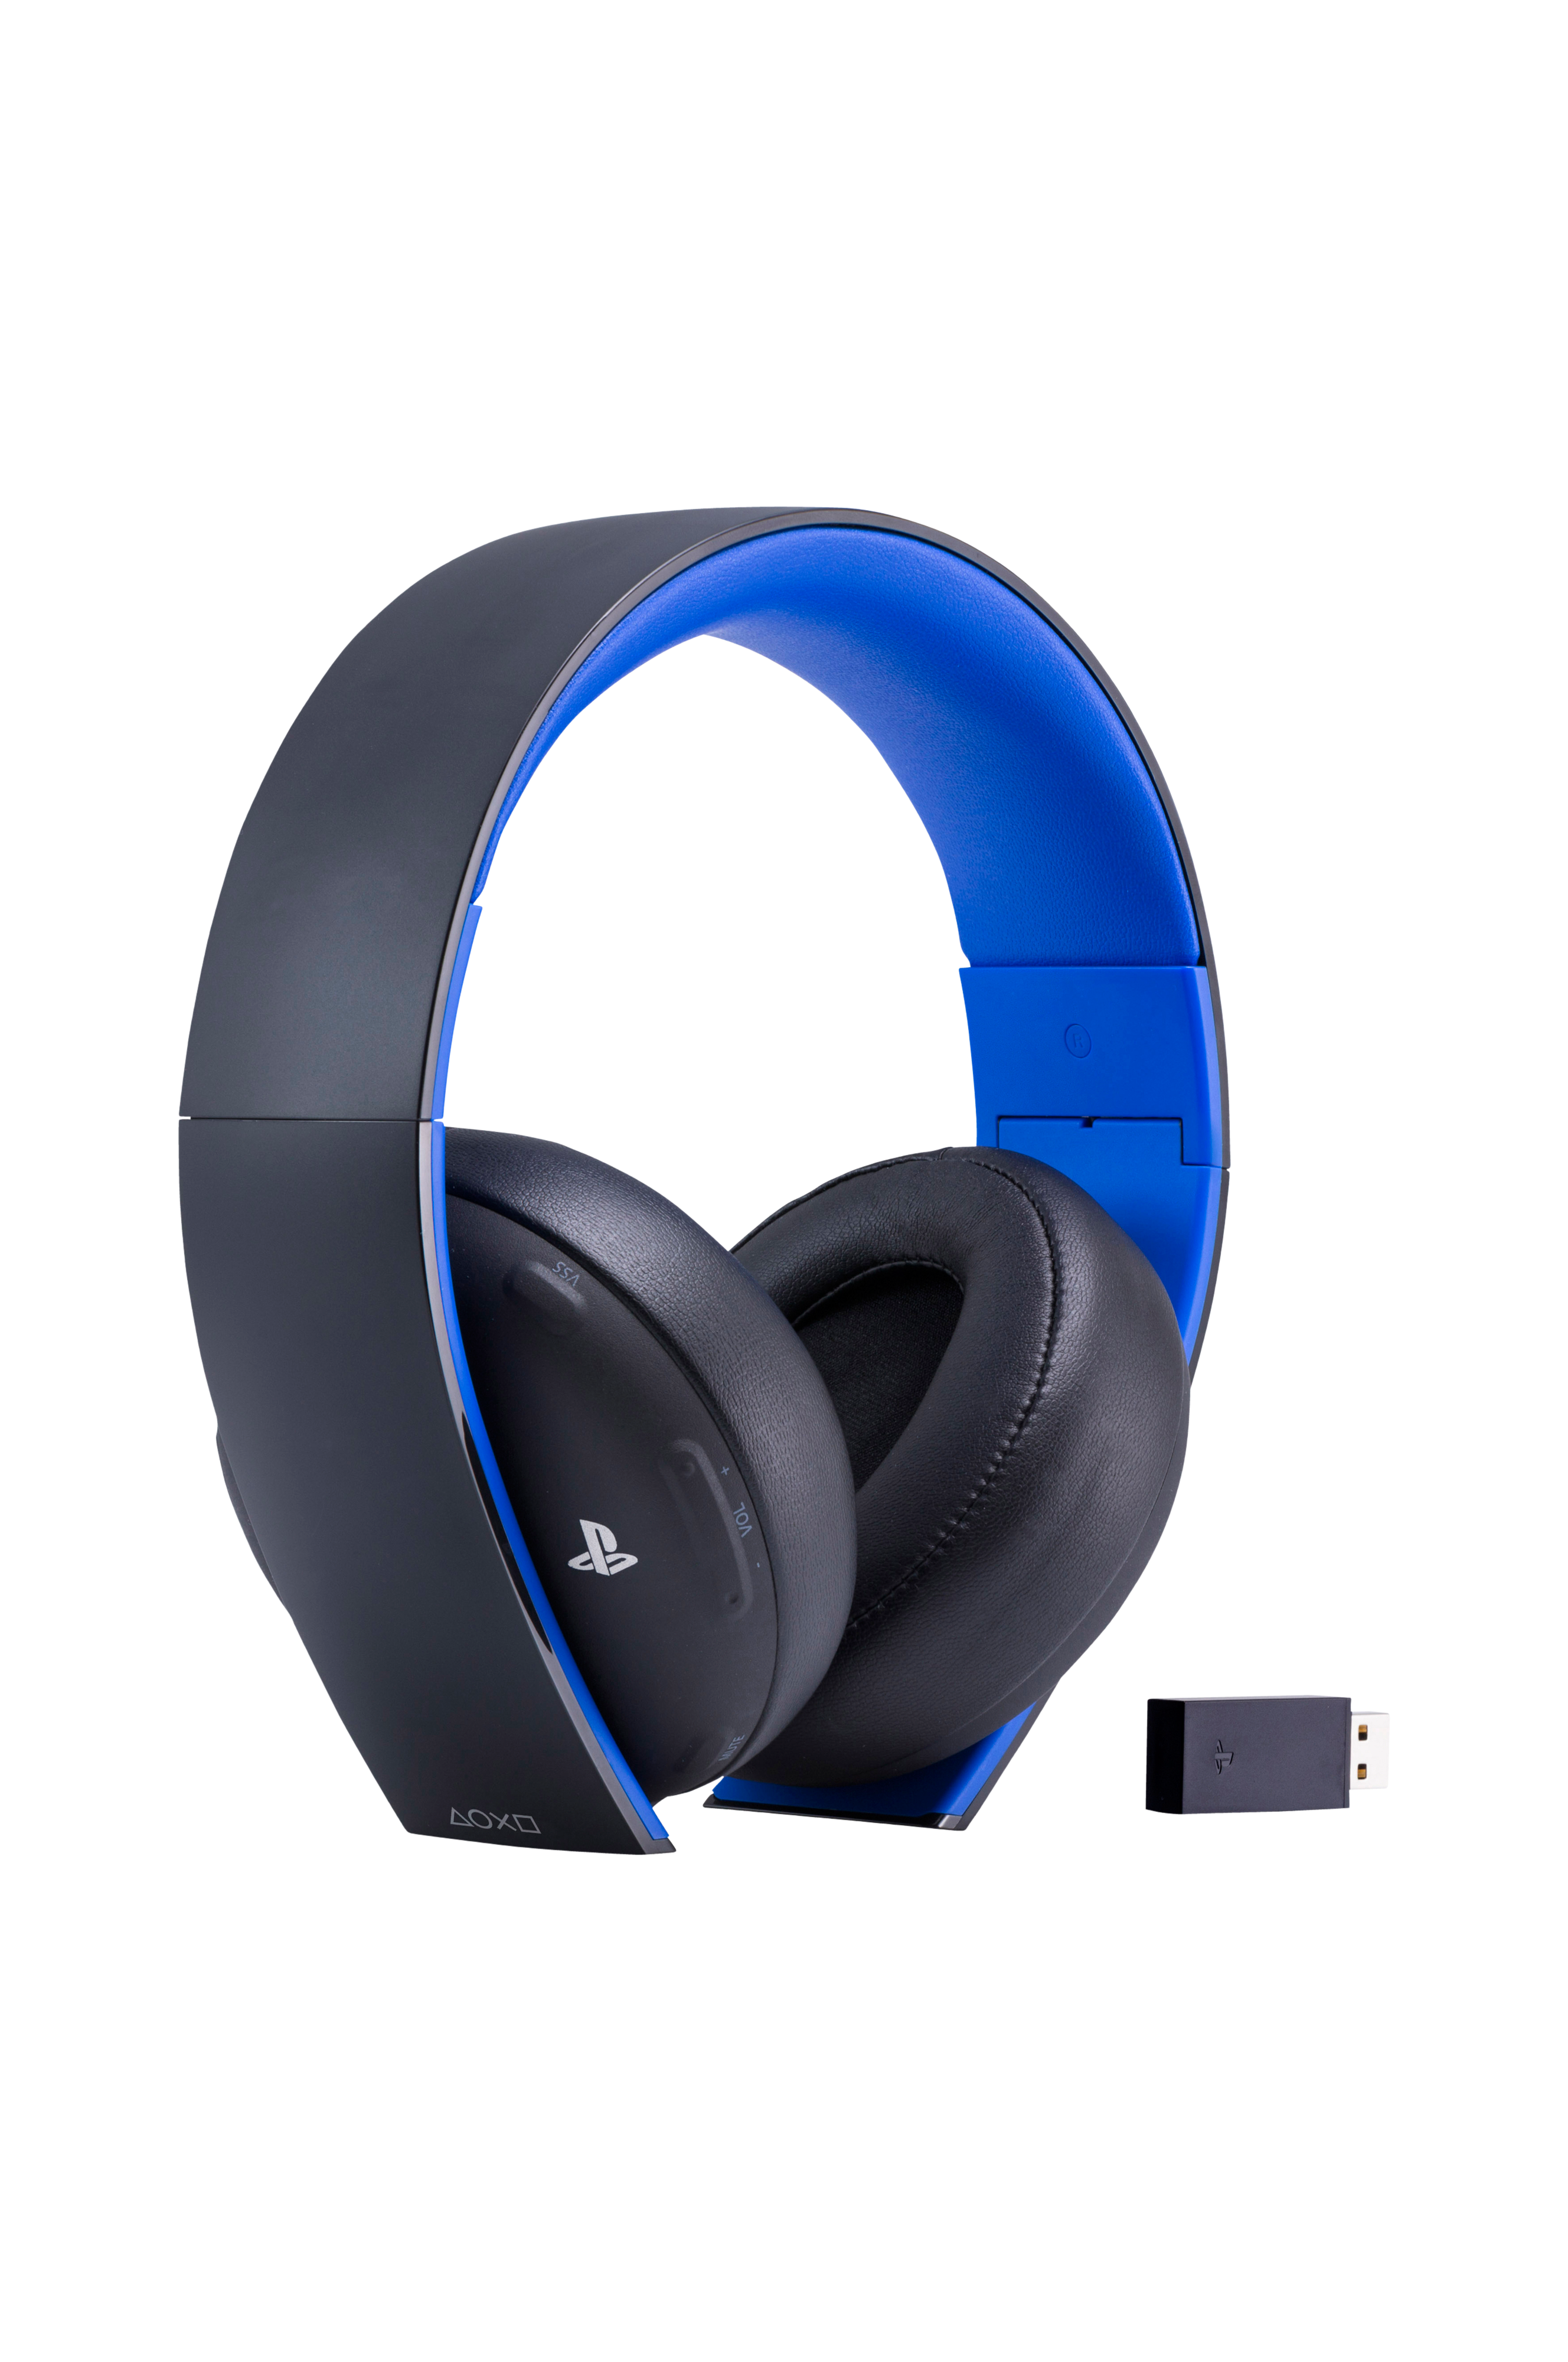 Ps5 wireless. Sony Wireless stereo Headset Headset 3. Sony Pulse Wireless stereo Headset Elite Edition. Наушники Wireless stereo Headset ps4. Wireless stereo Headset 2.0 ps4.